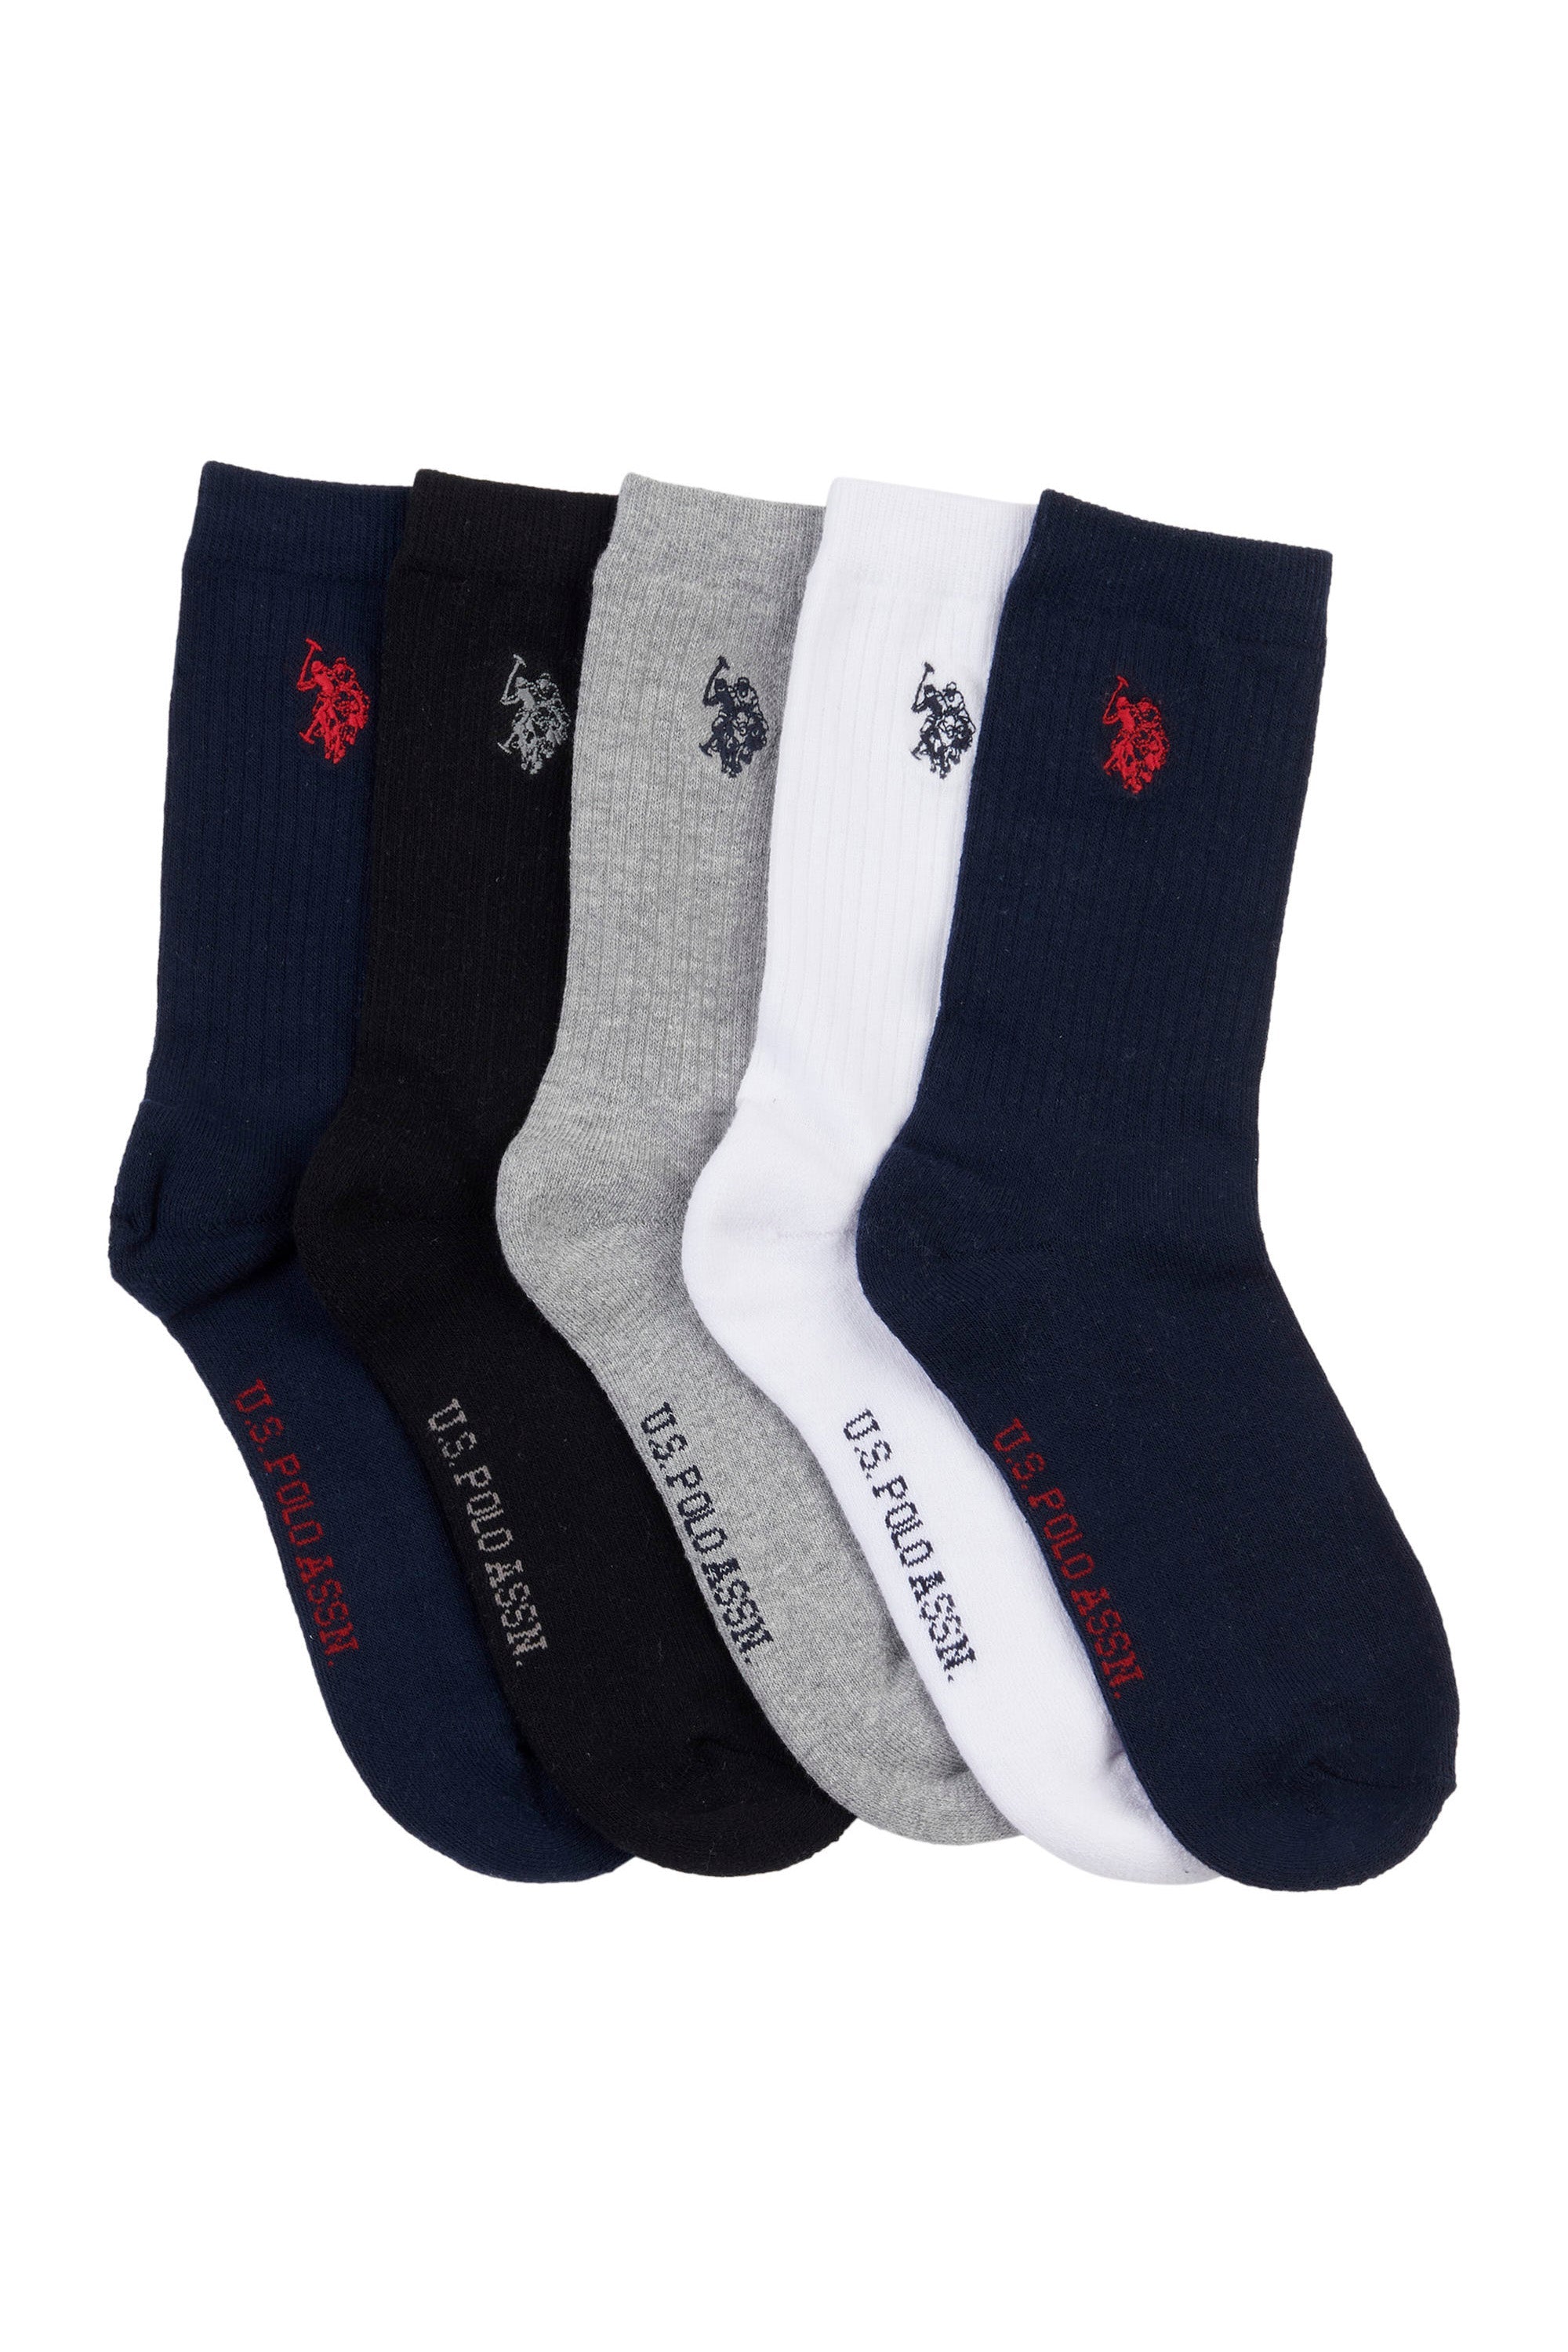 U.S. Polo Assn. 5 Pack Sport Socks in Navy Blazer / Haute Red